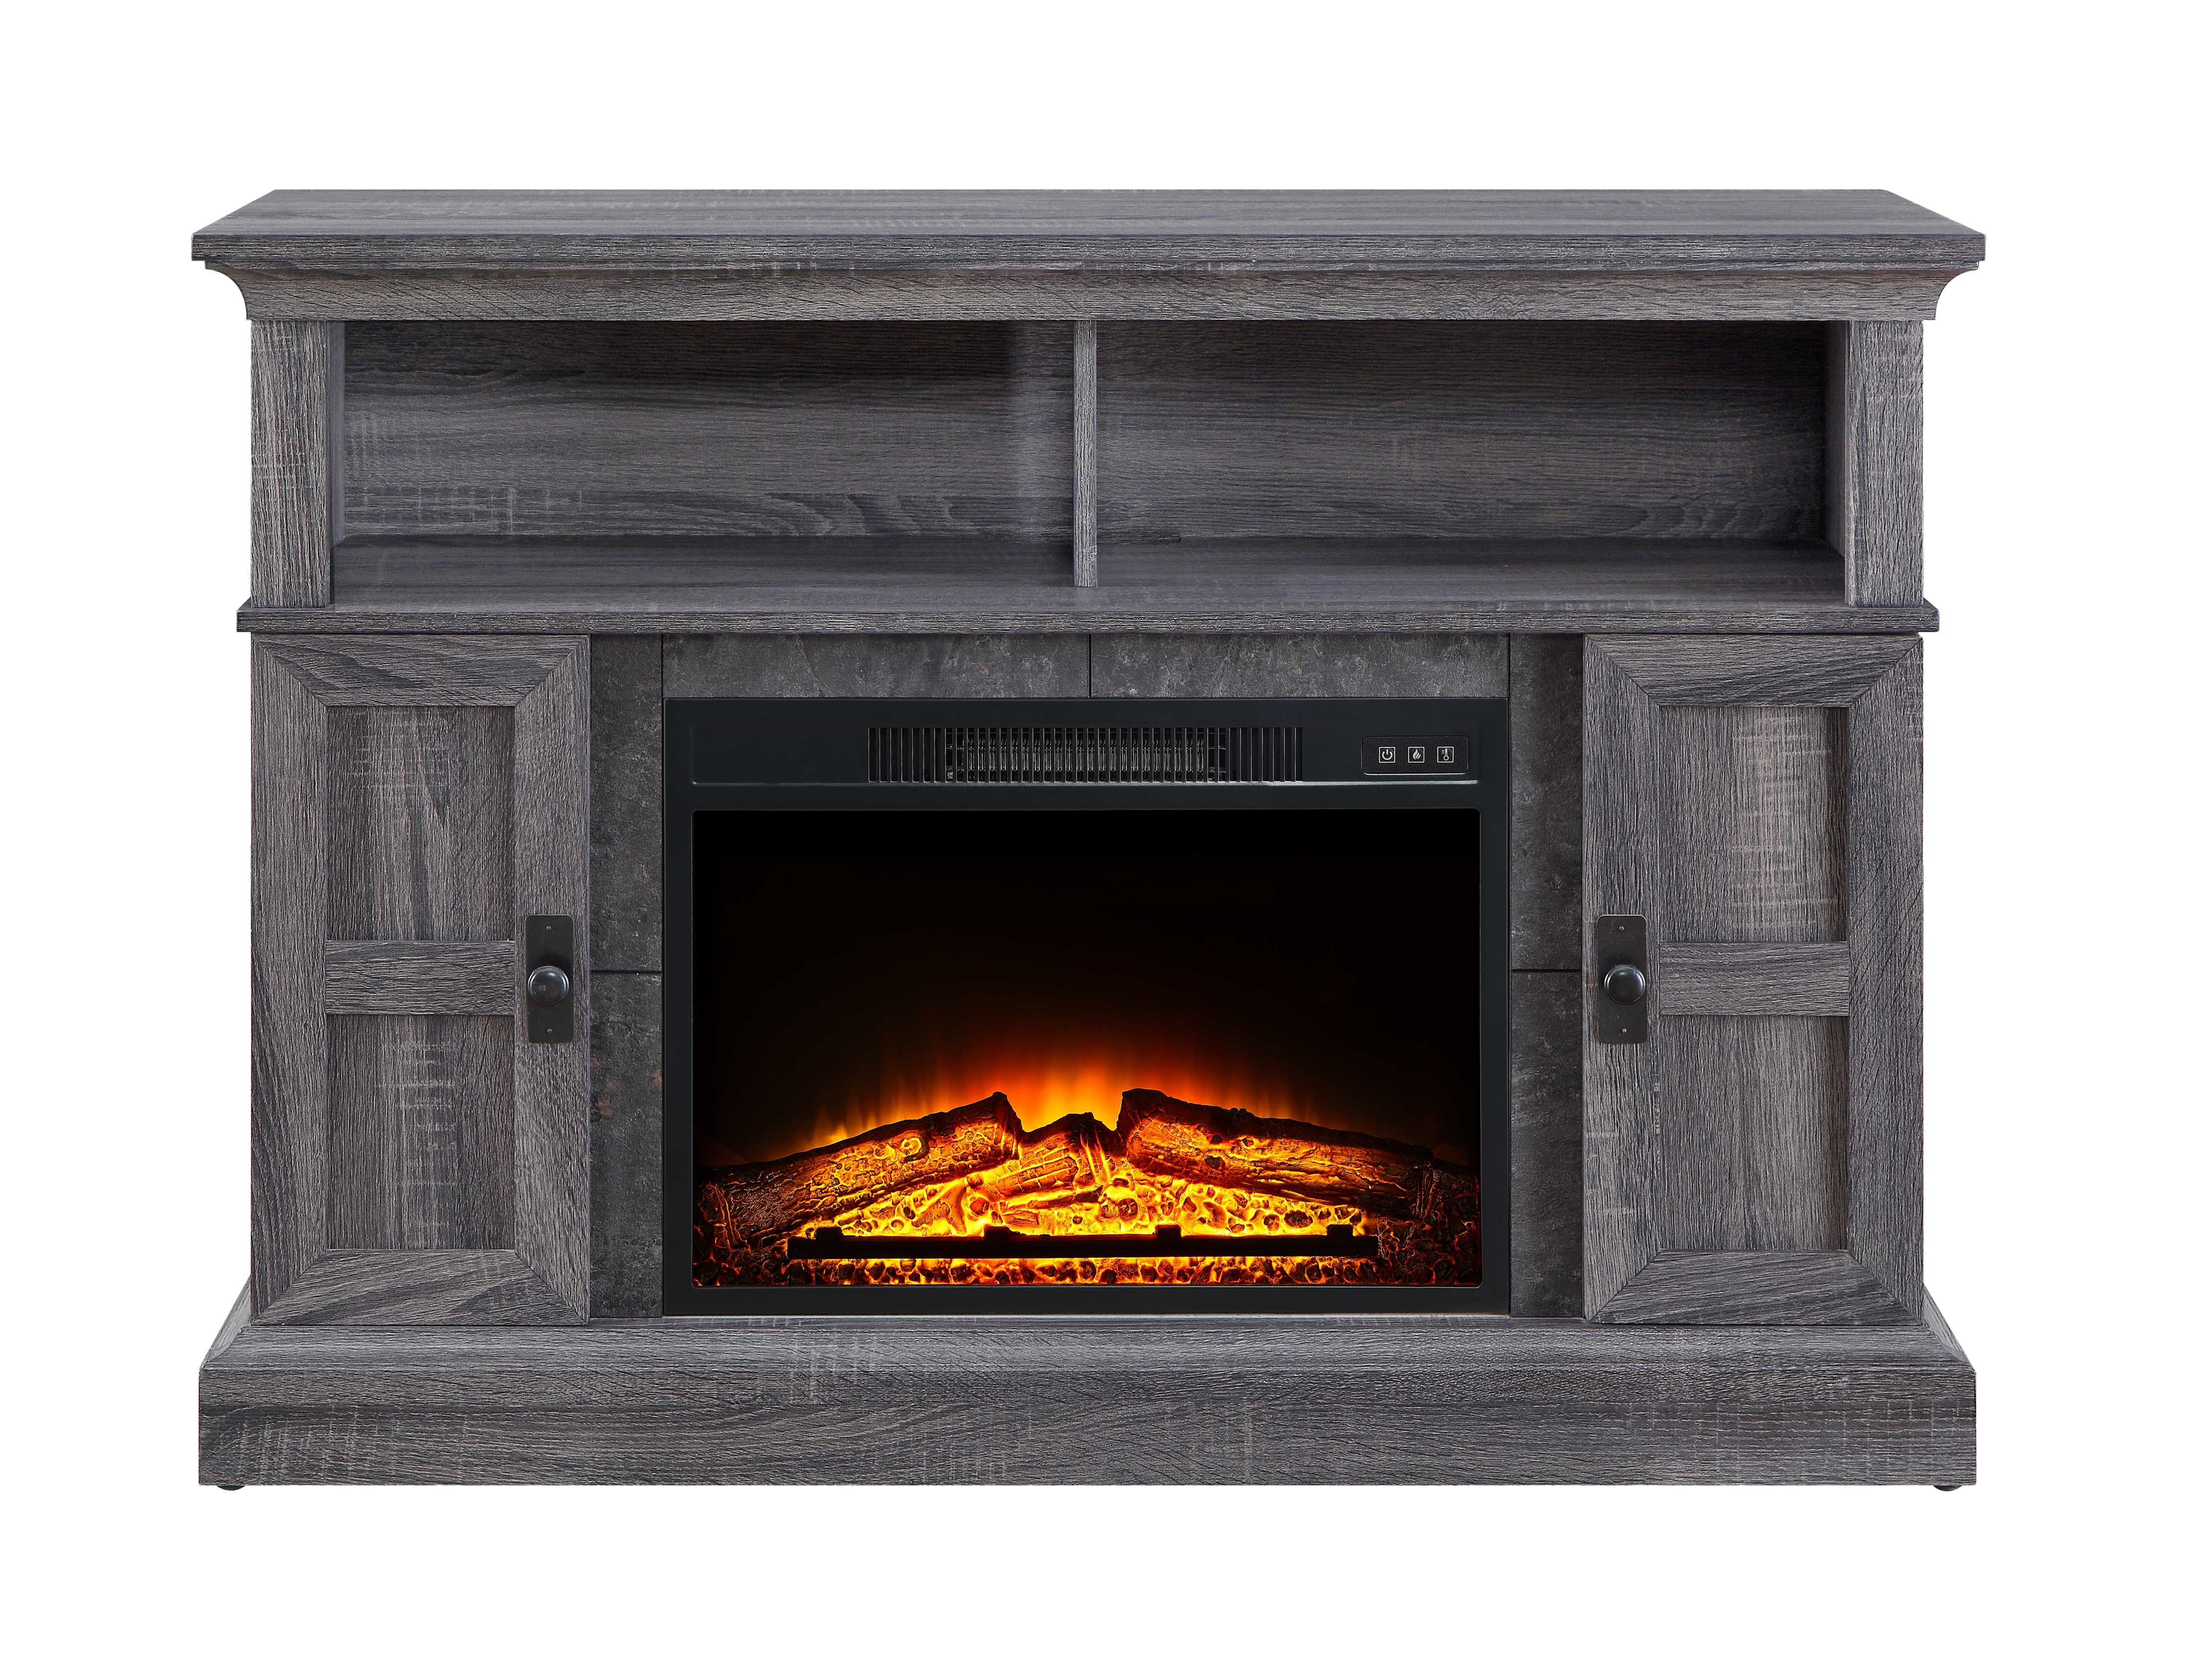 Best ideas about Whalen Media Fireplace
. Save or Pin Whalen Media Fireplace Console for TVs up to 55" Dark Now.